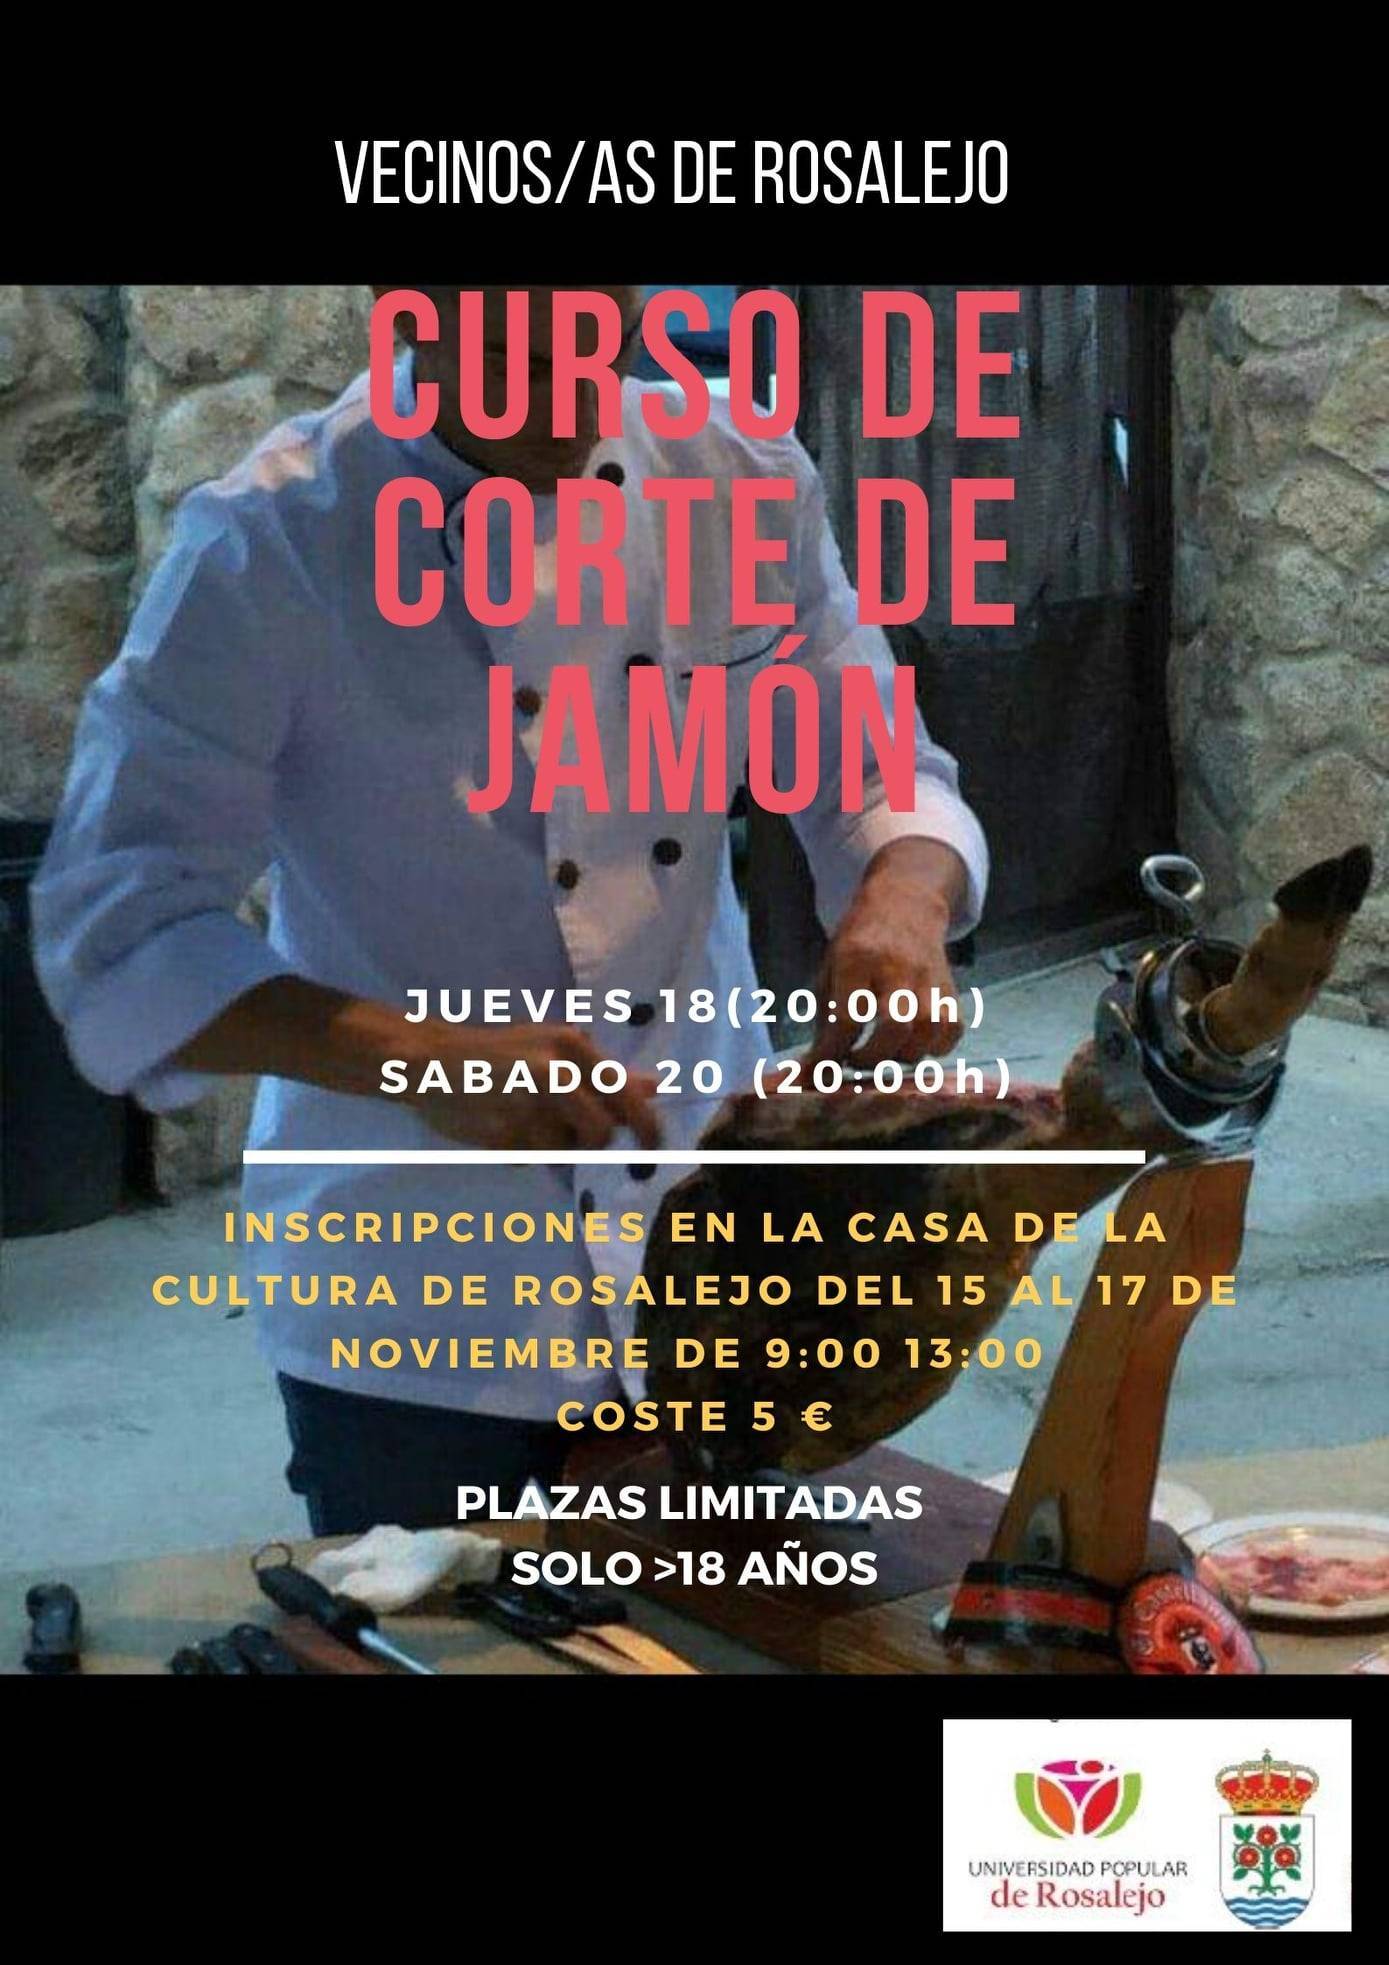 Curso de corte de jamón (2021) - Rosalejo (Cáceres)